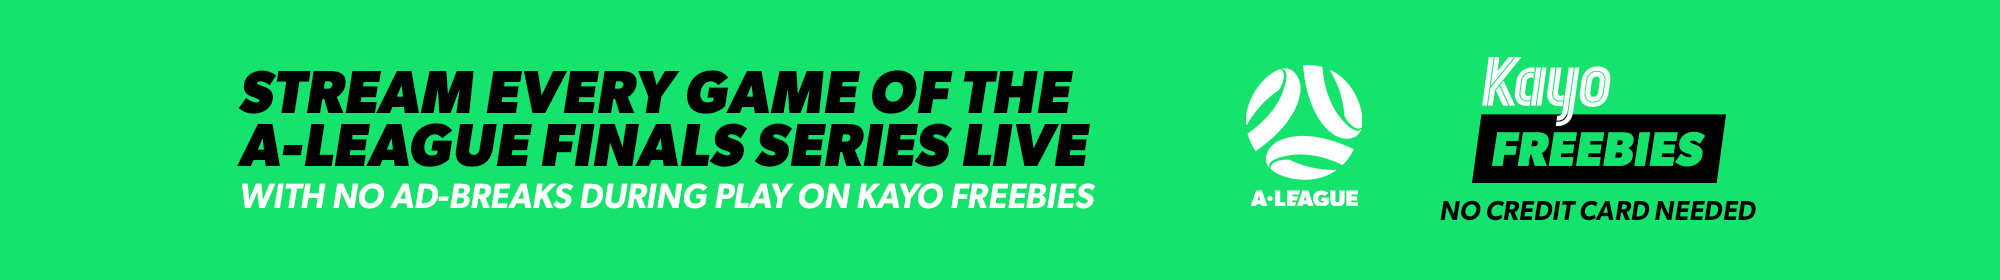 Kayo Freebies - Thin Banner